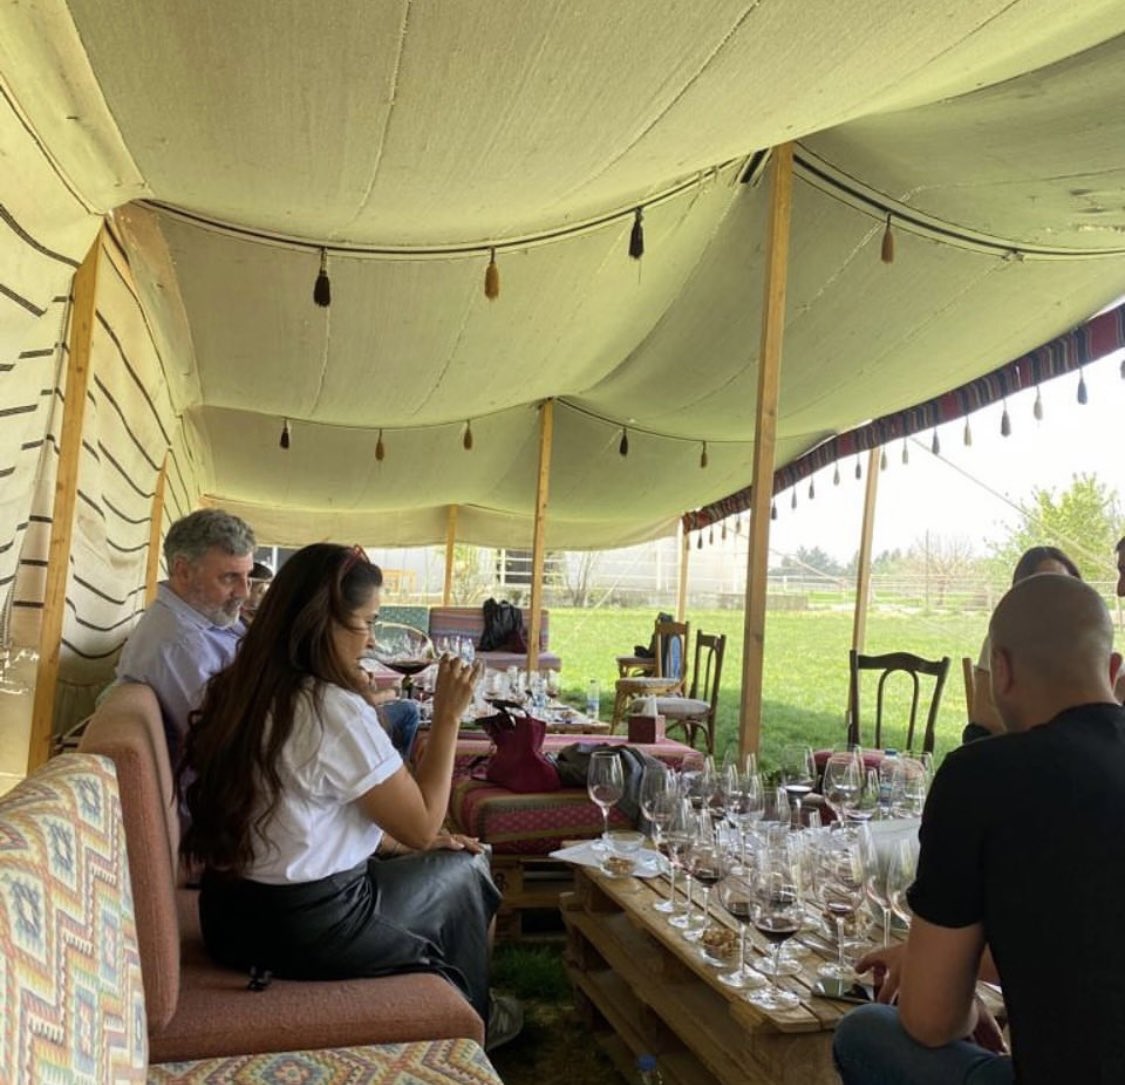 A wonderful Vertical “Chateau les Cedres” tasting 1999-2001-2003-2007-2009 with @hydamus @sylvanah @marchachach @joemaal @teddyhajjar 
.
#wine #redwine #chateaulescedres #verticaltasting #lebanon #winesoflebanon #lebanesewineries #sommelier #winetasting #winelover #summervenue